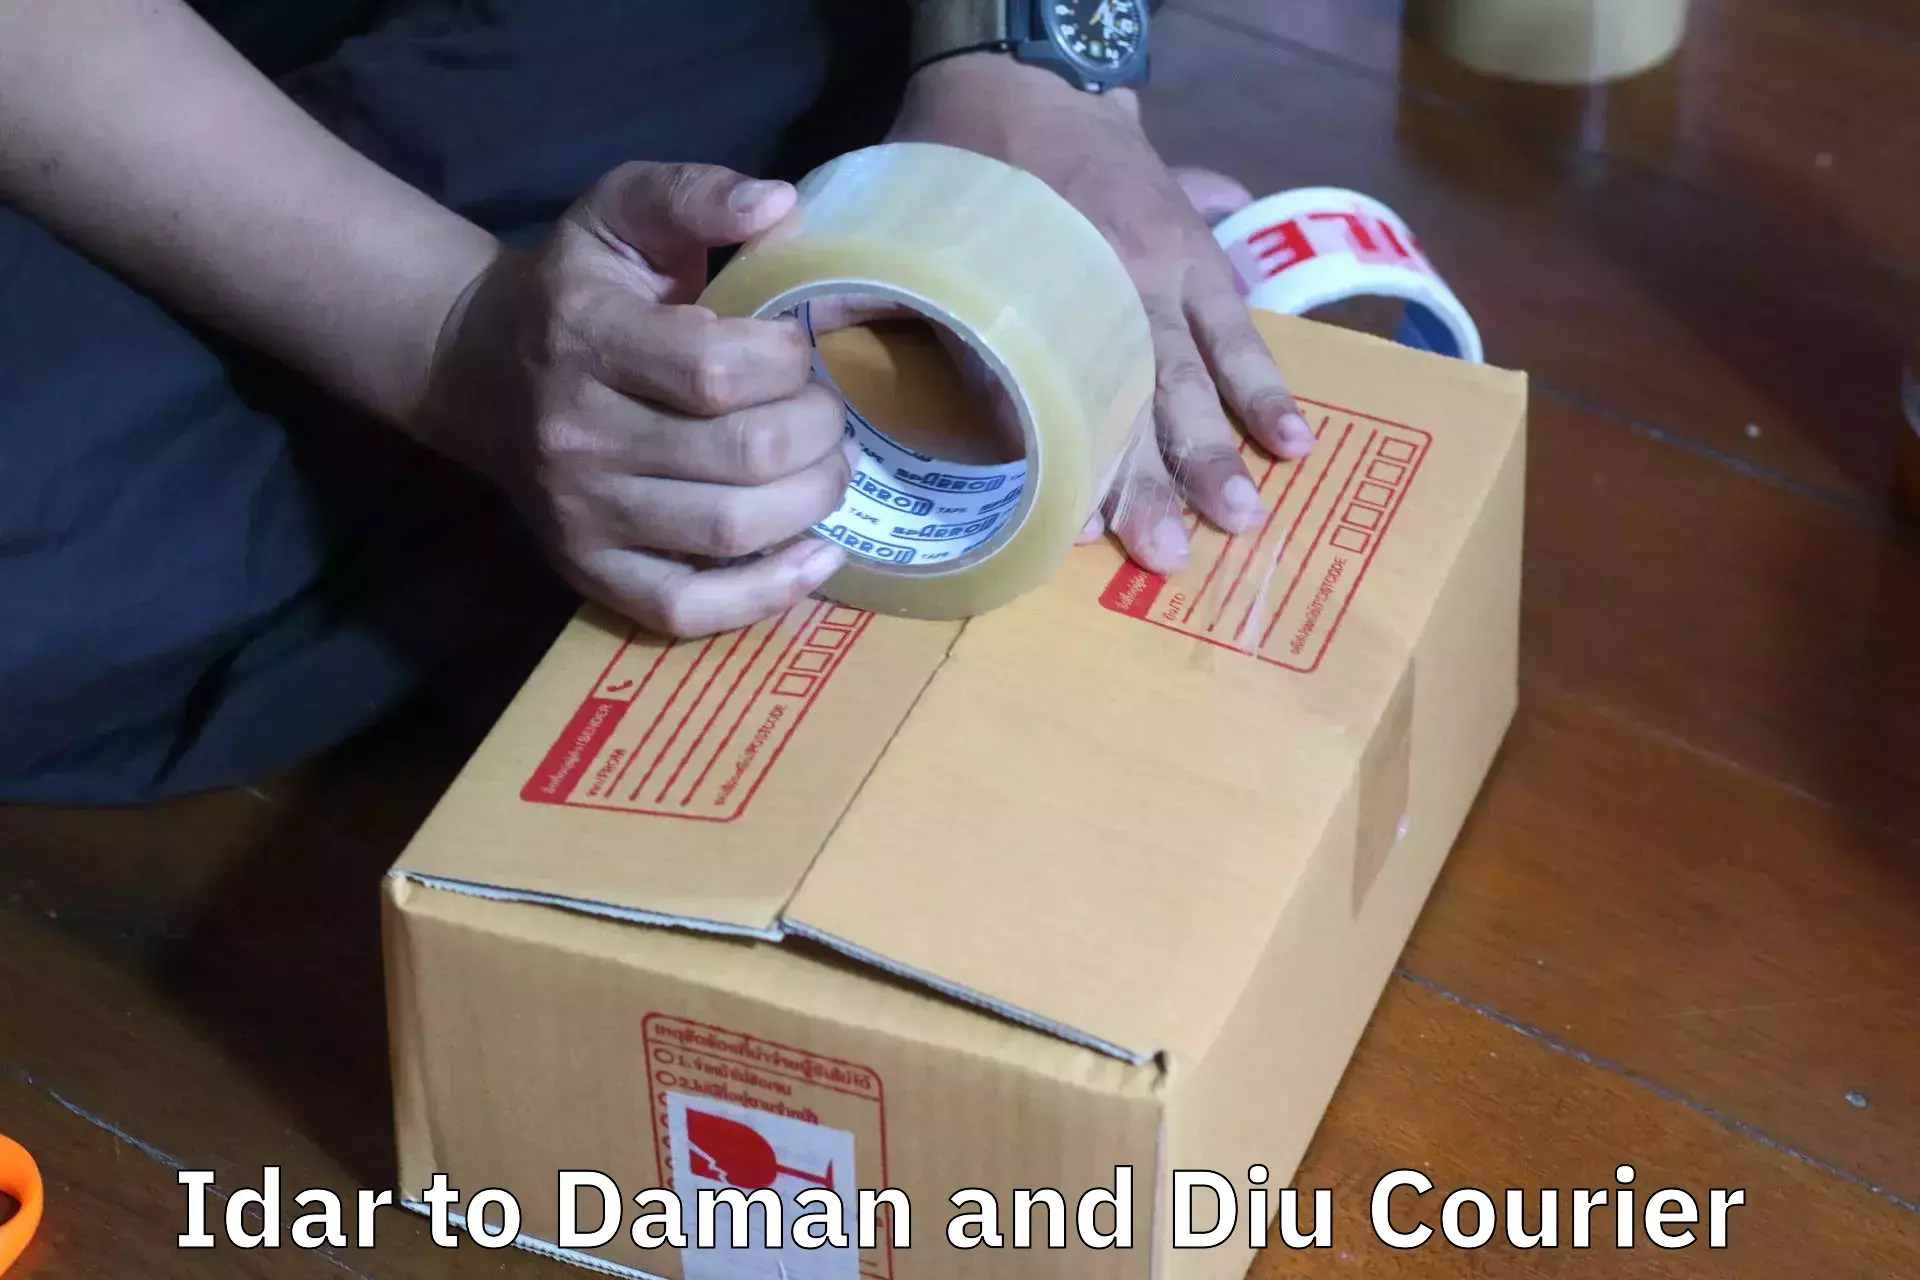 Efficient moving company Idar to Diu